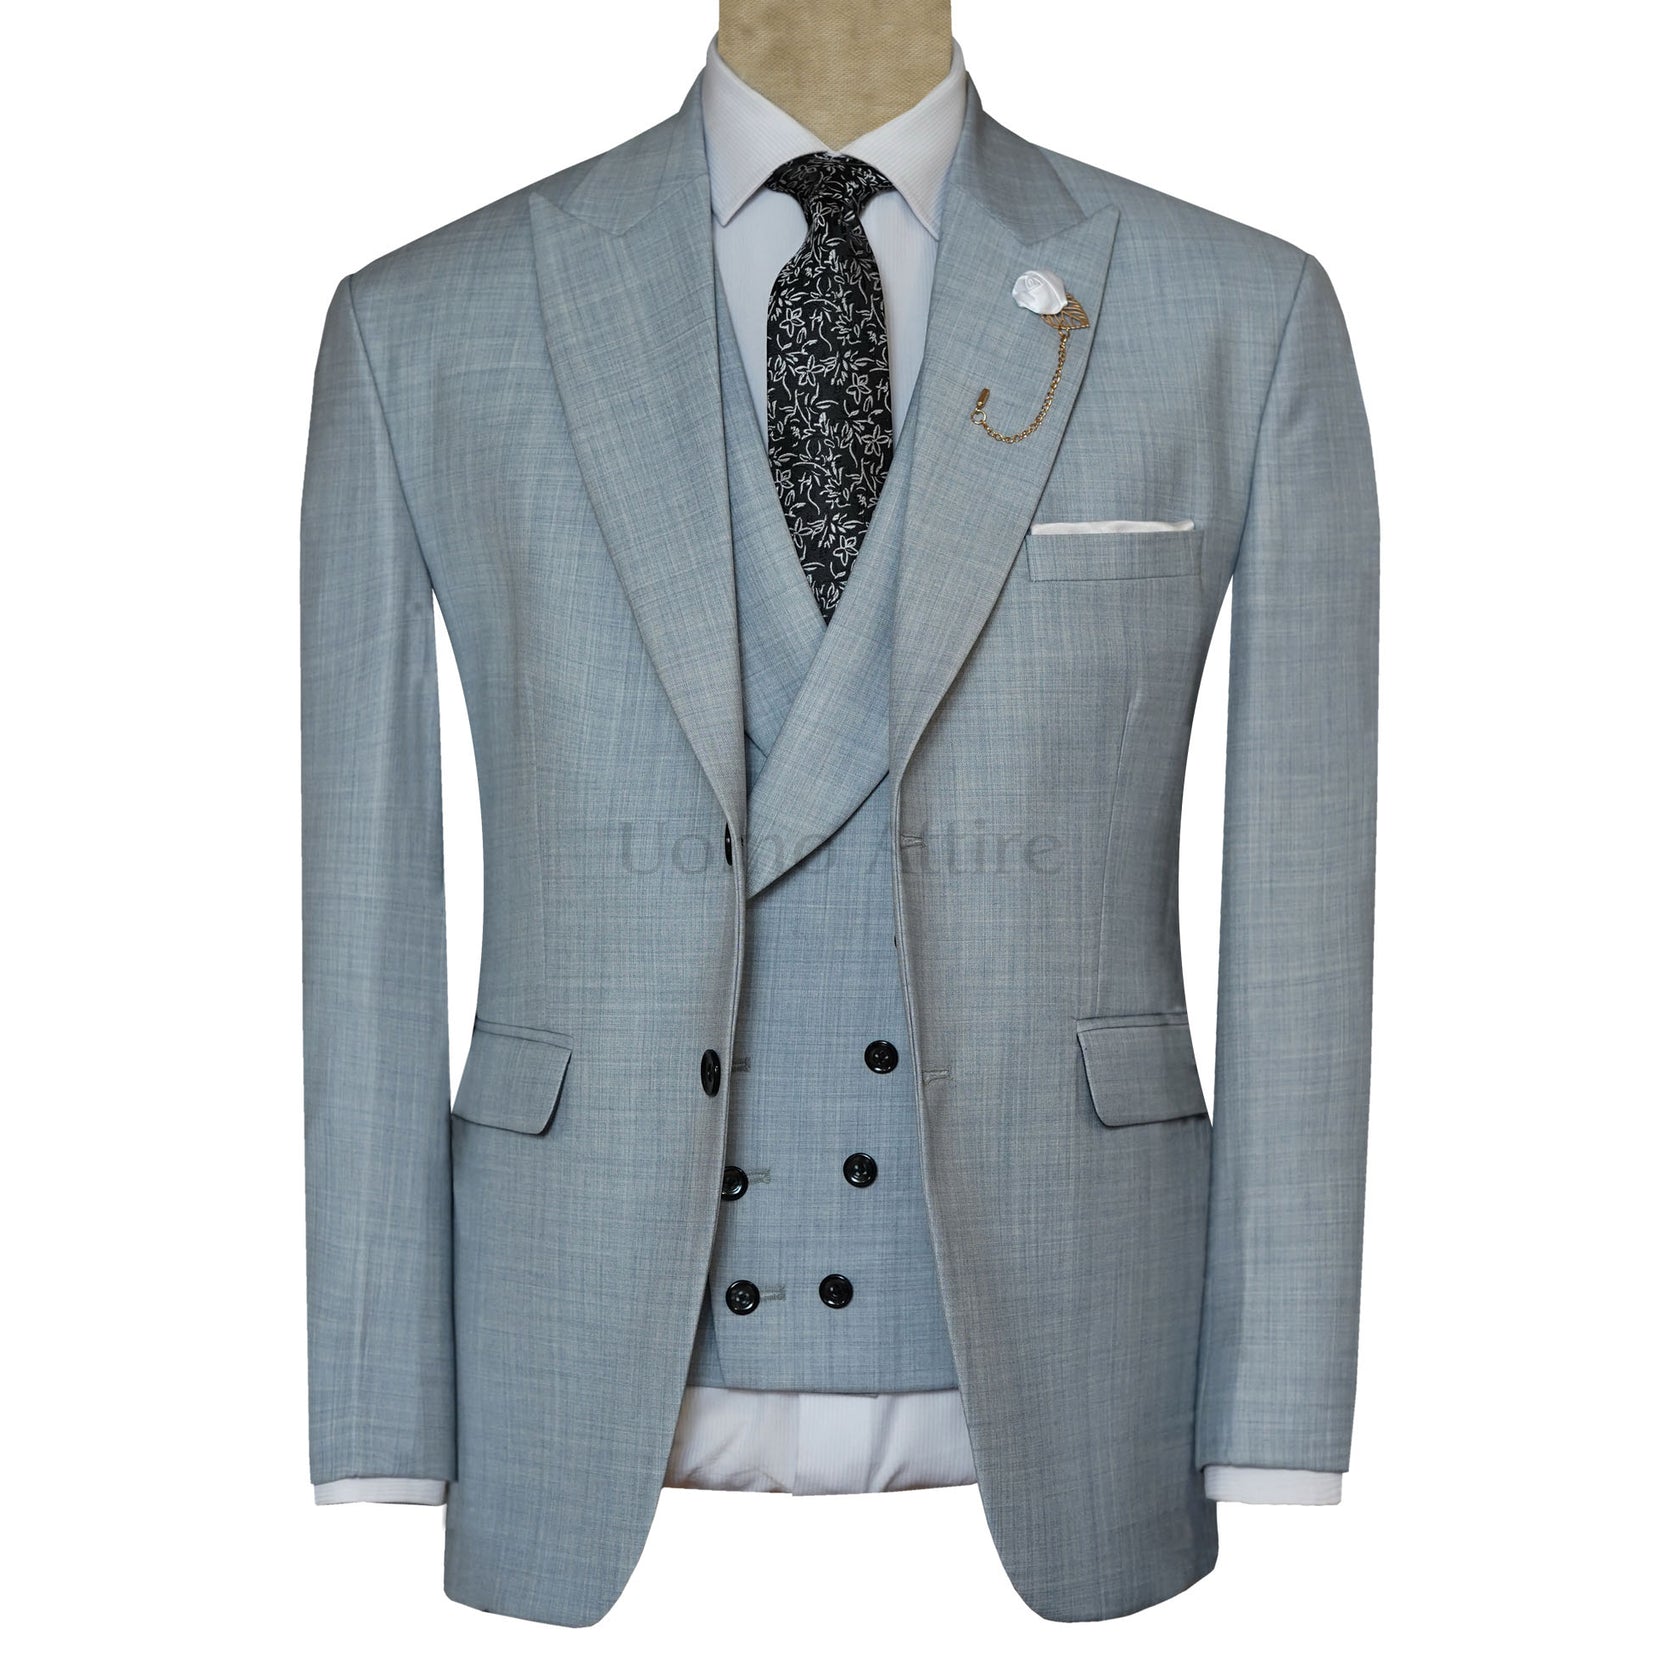 Blue Suits for Men | Men's Wedding Wear and Formal Wear – Uomo Attire